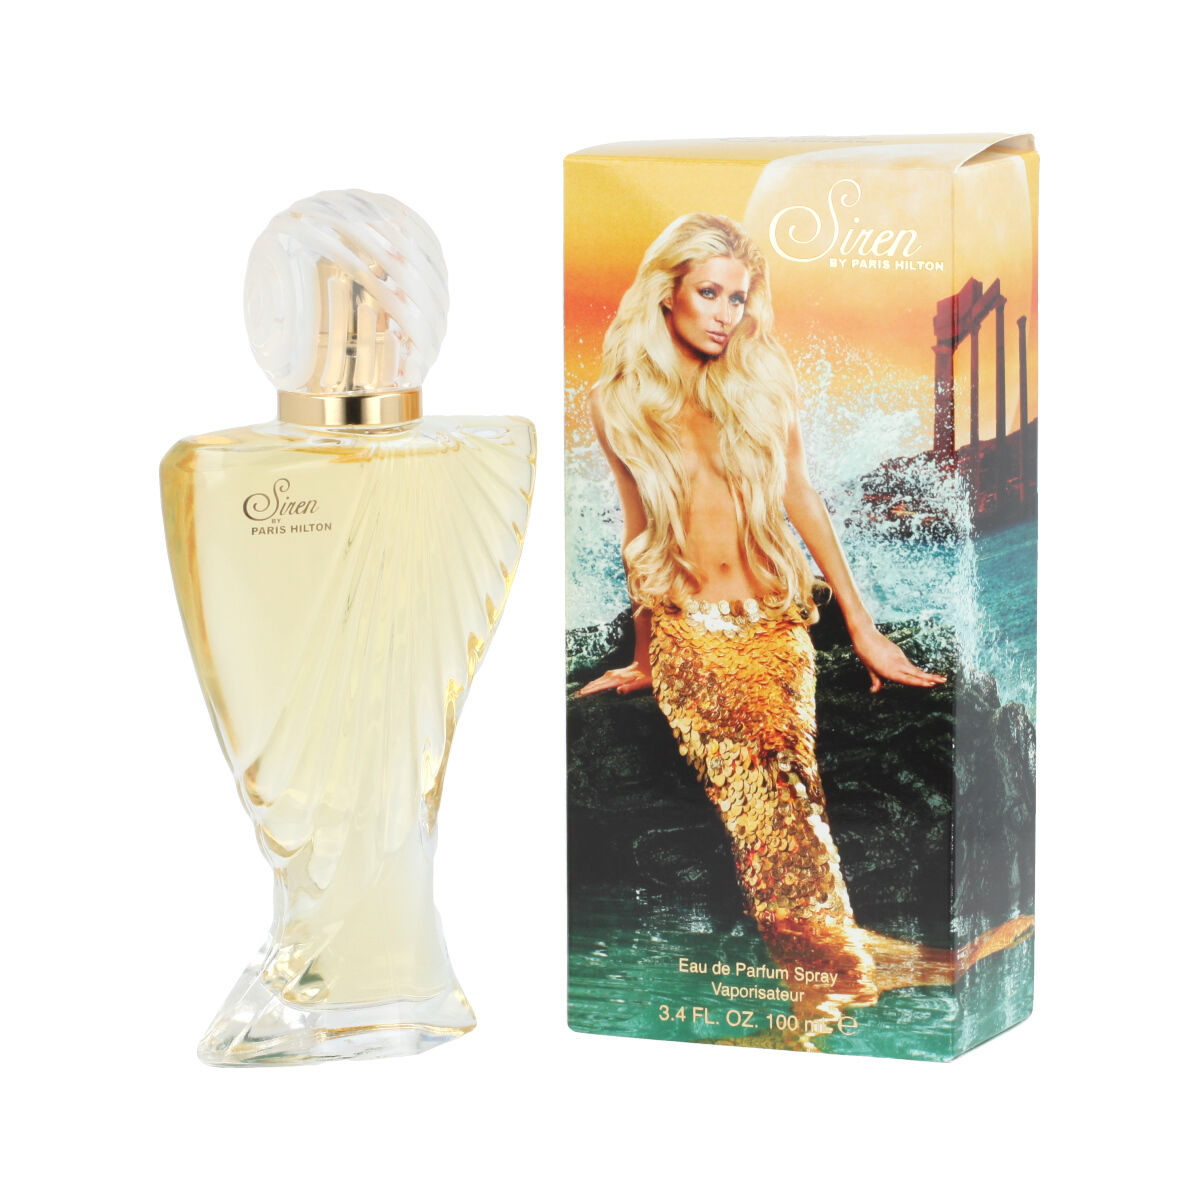 Parfum Femme Paris Hilton EDP Siren 100 ml